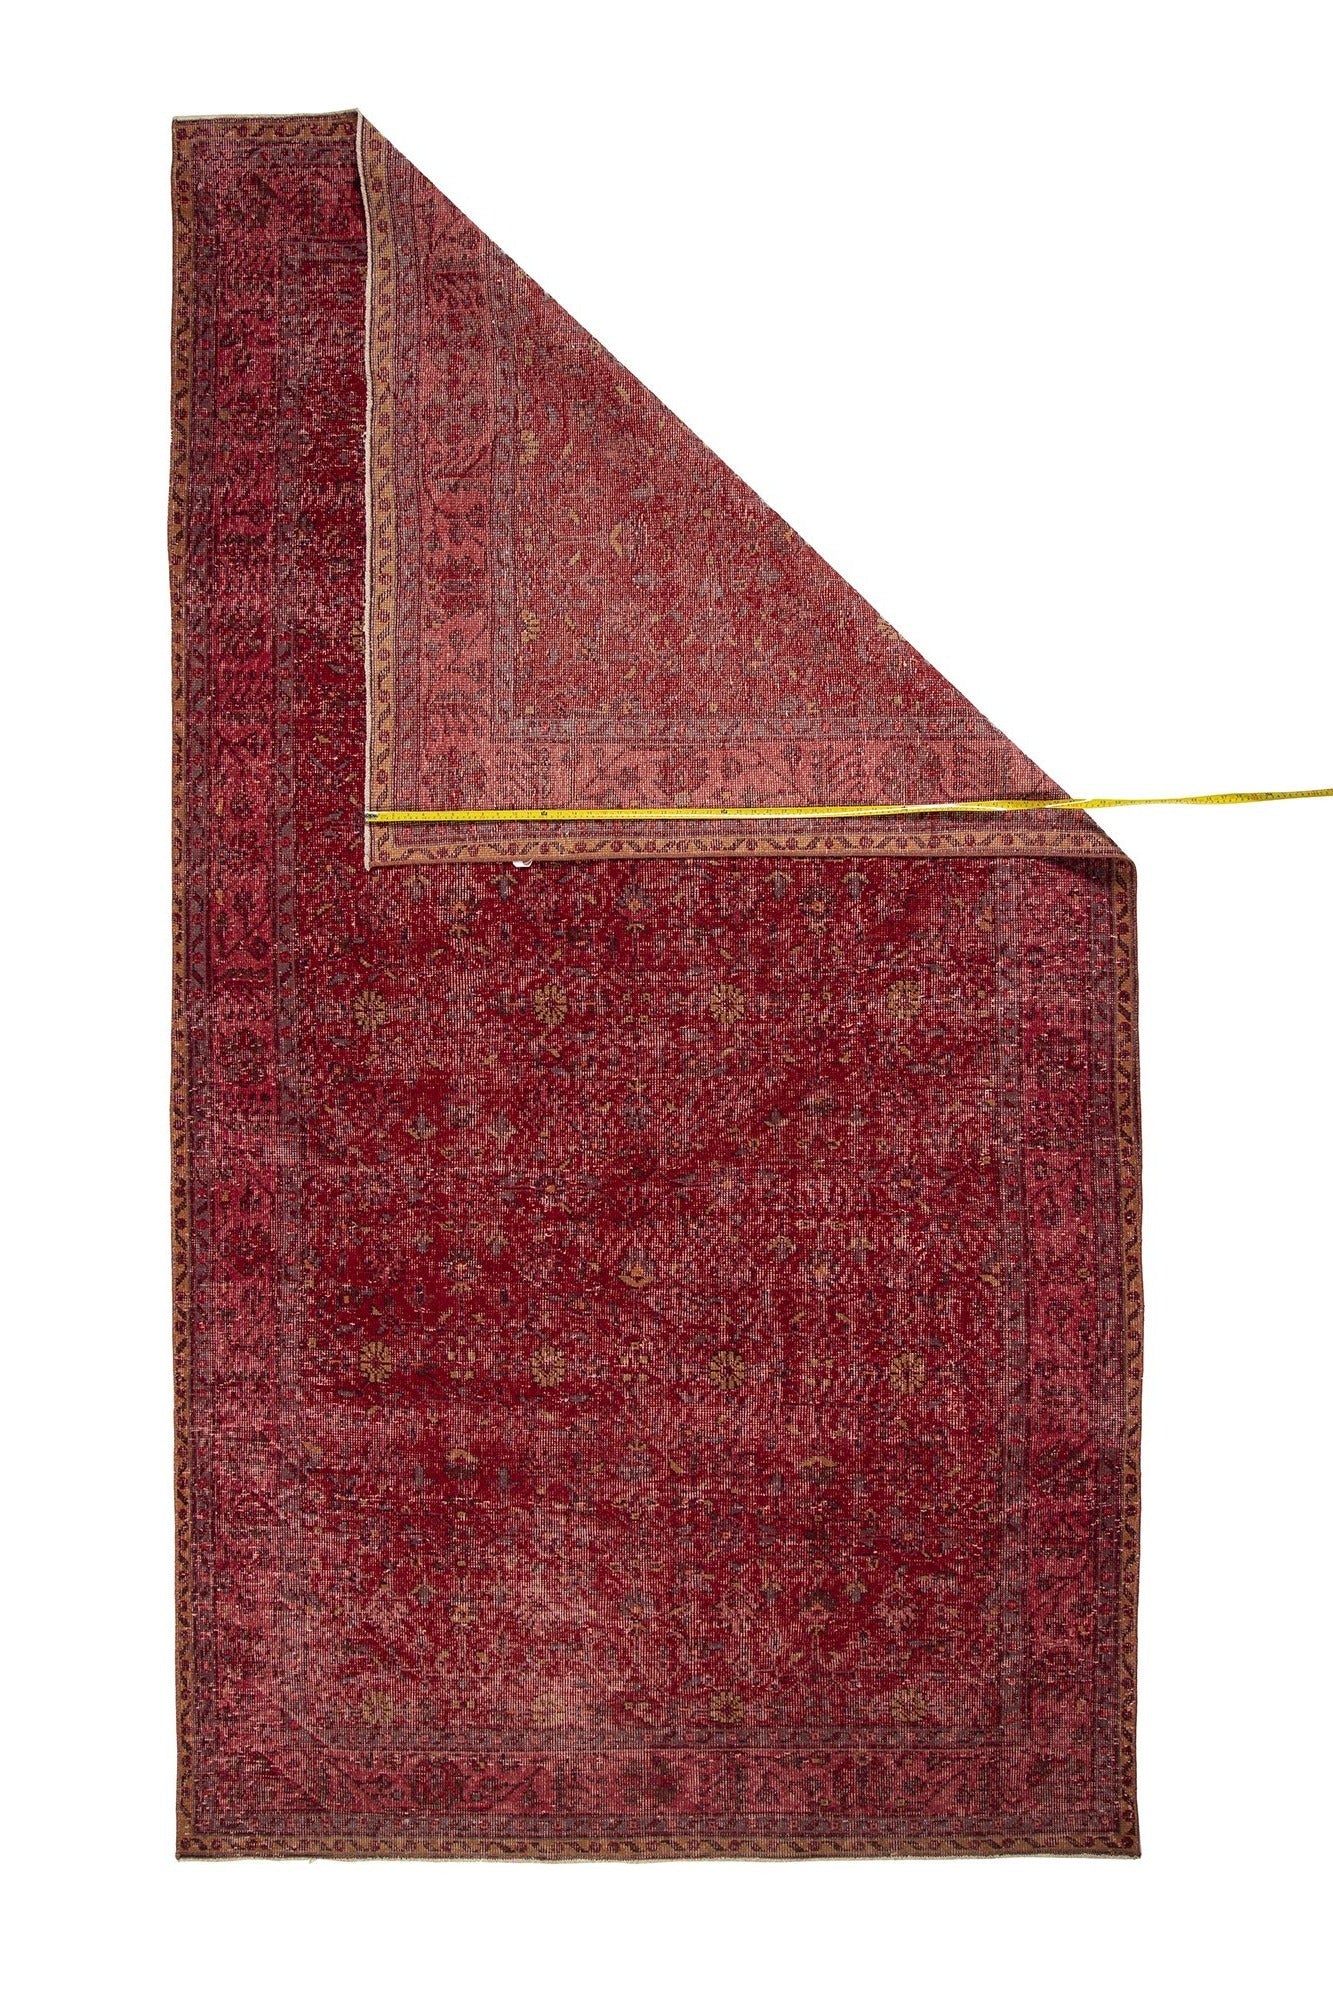 Vintage Wool Handmade Turkish Red Carpet product image #27556268736682